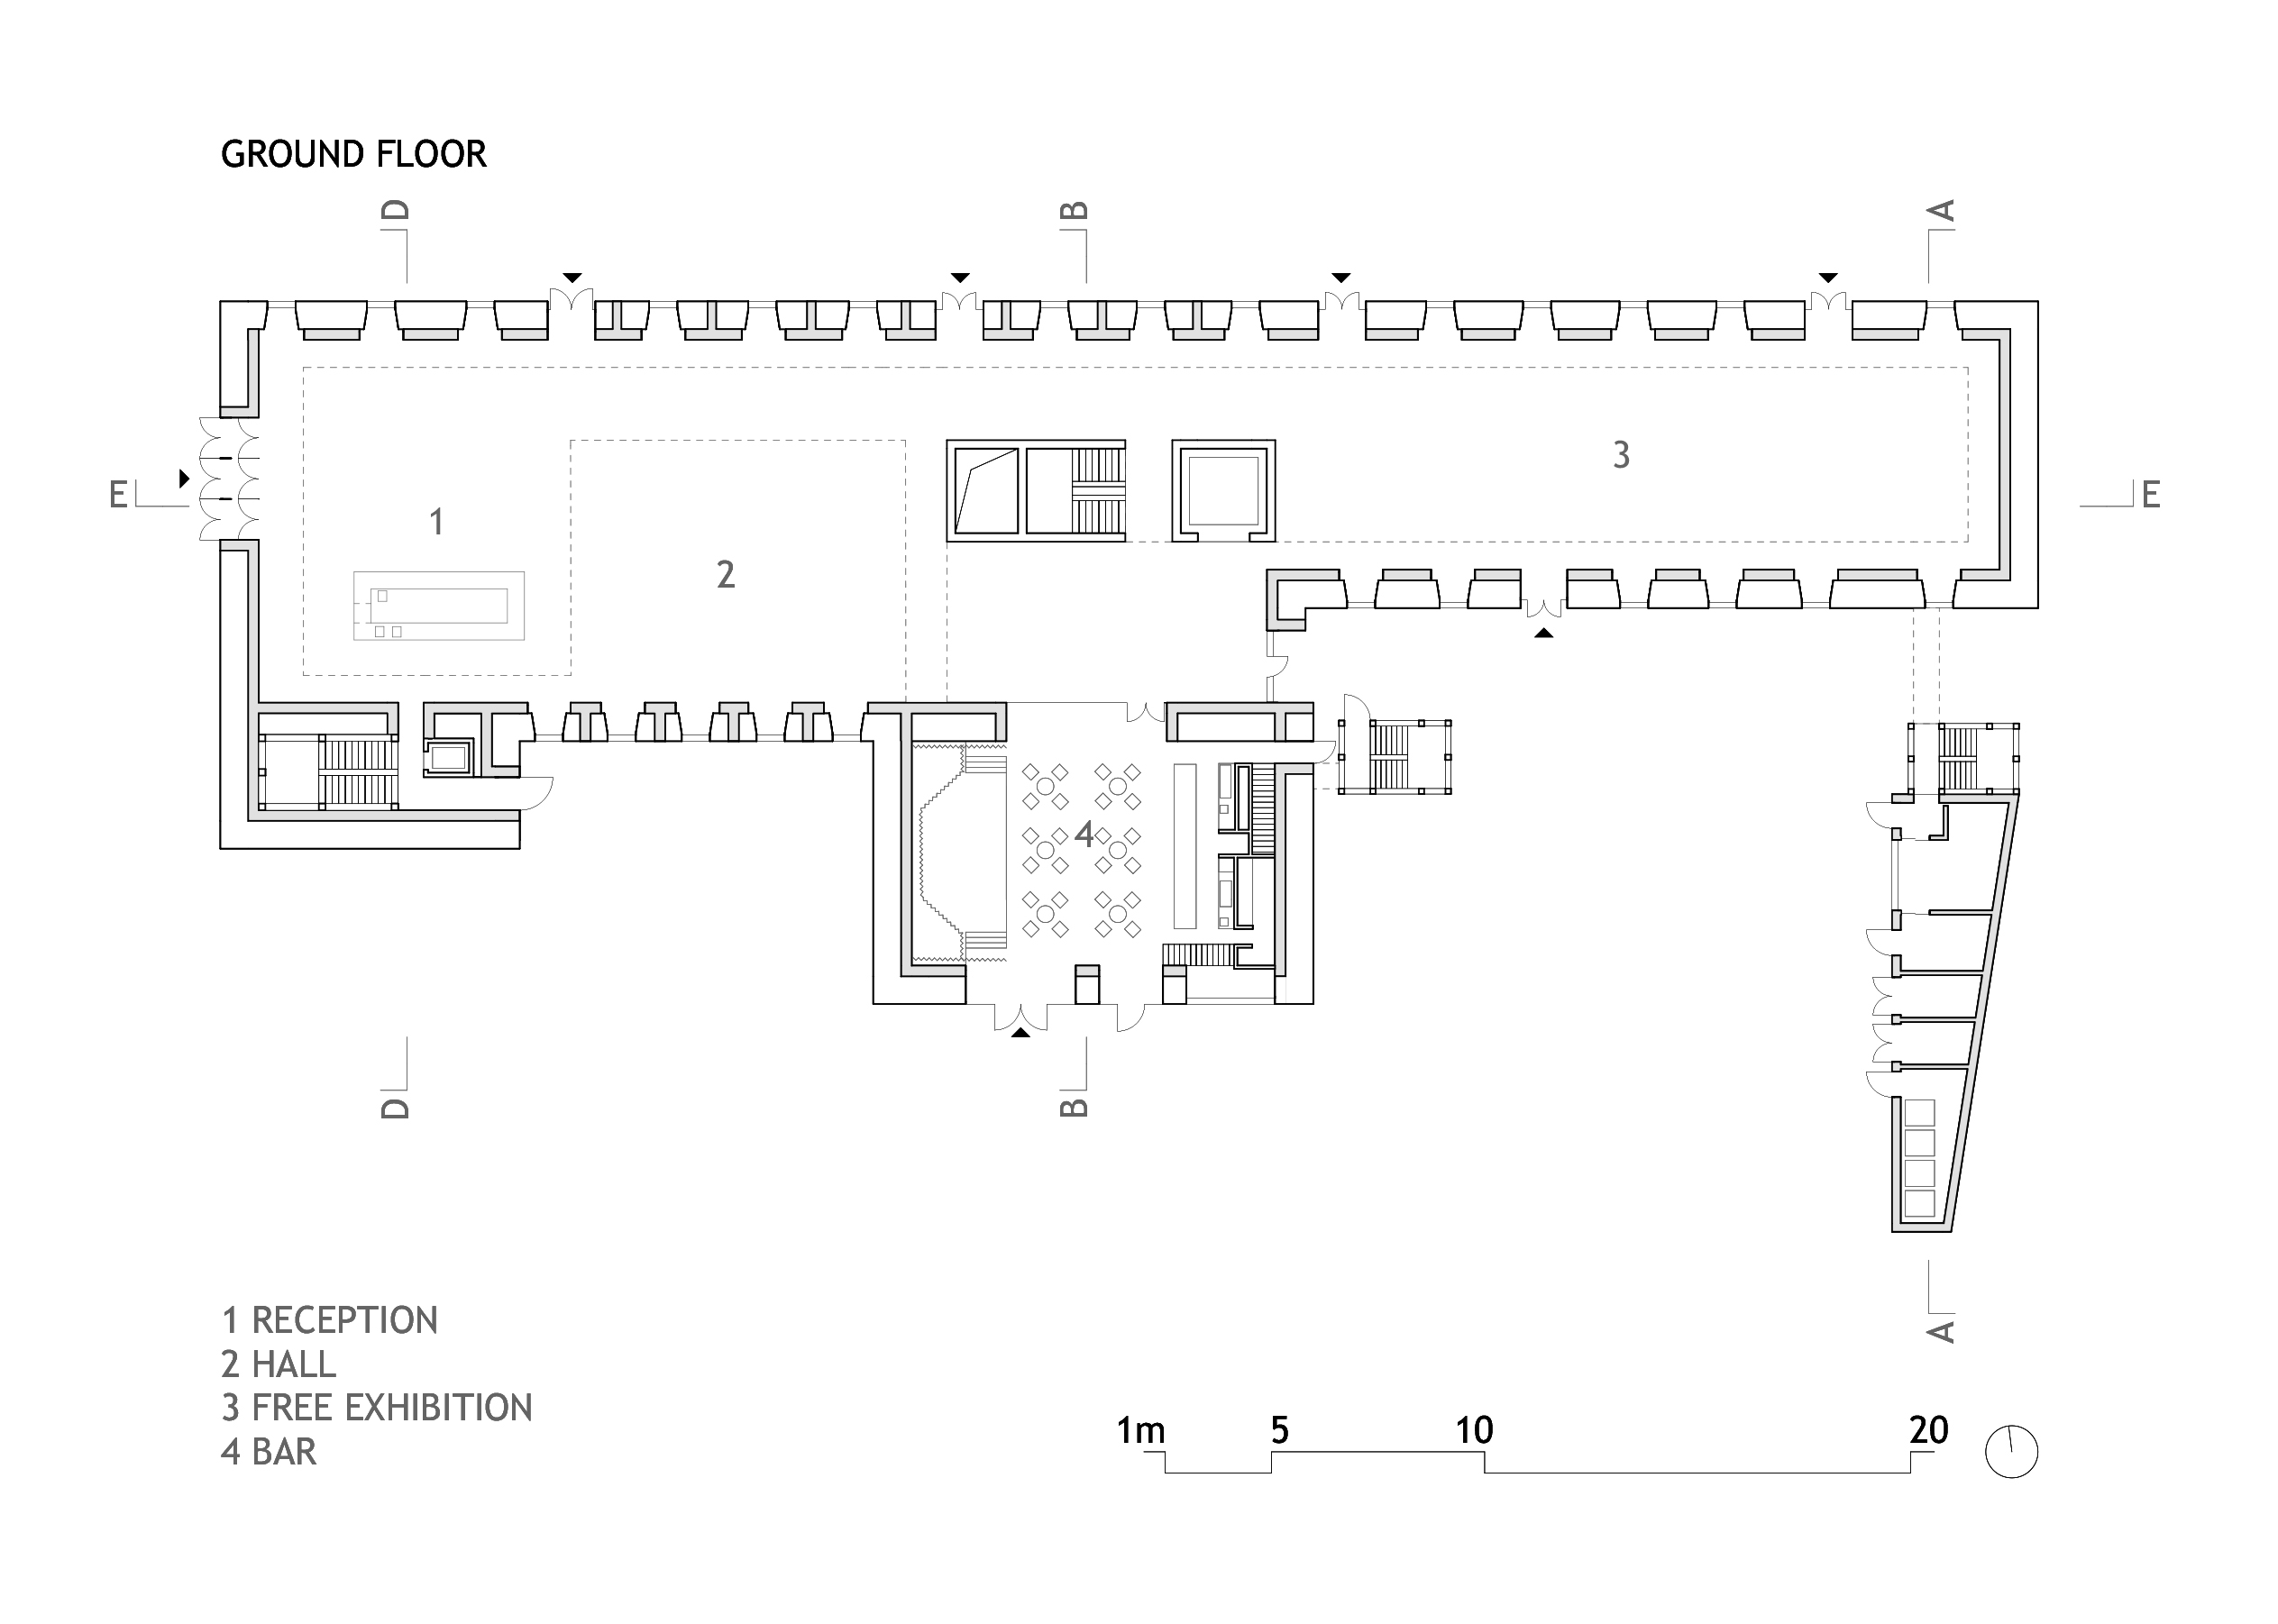 Ground floor plan of Cukrarna